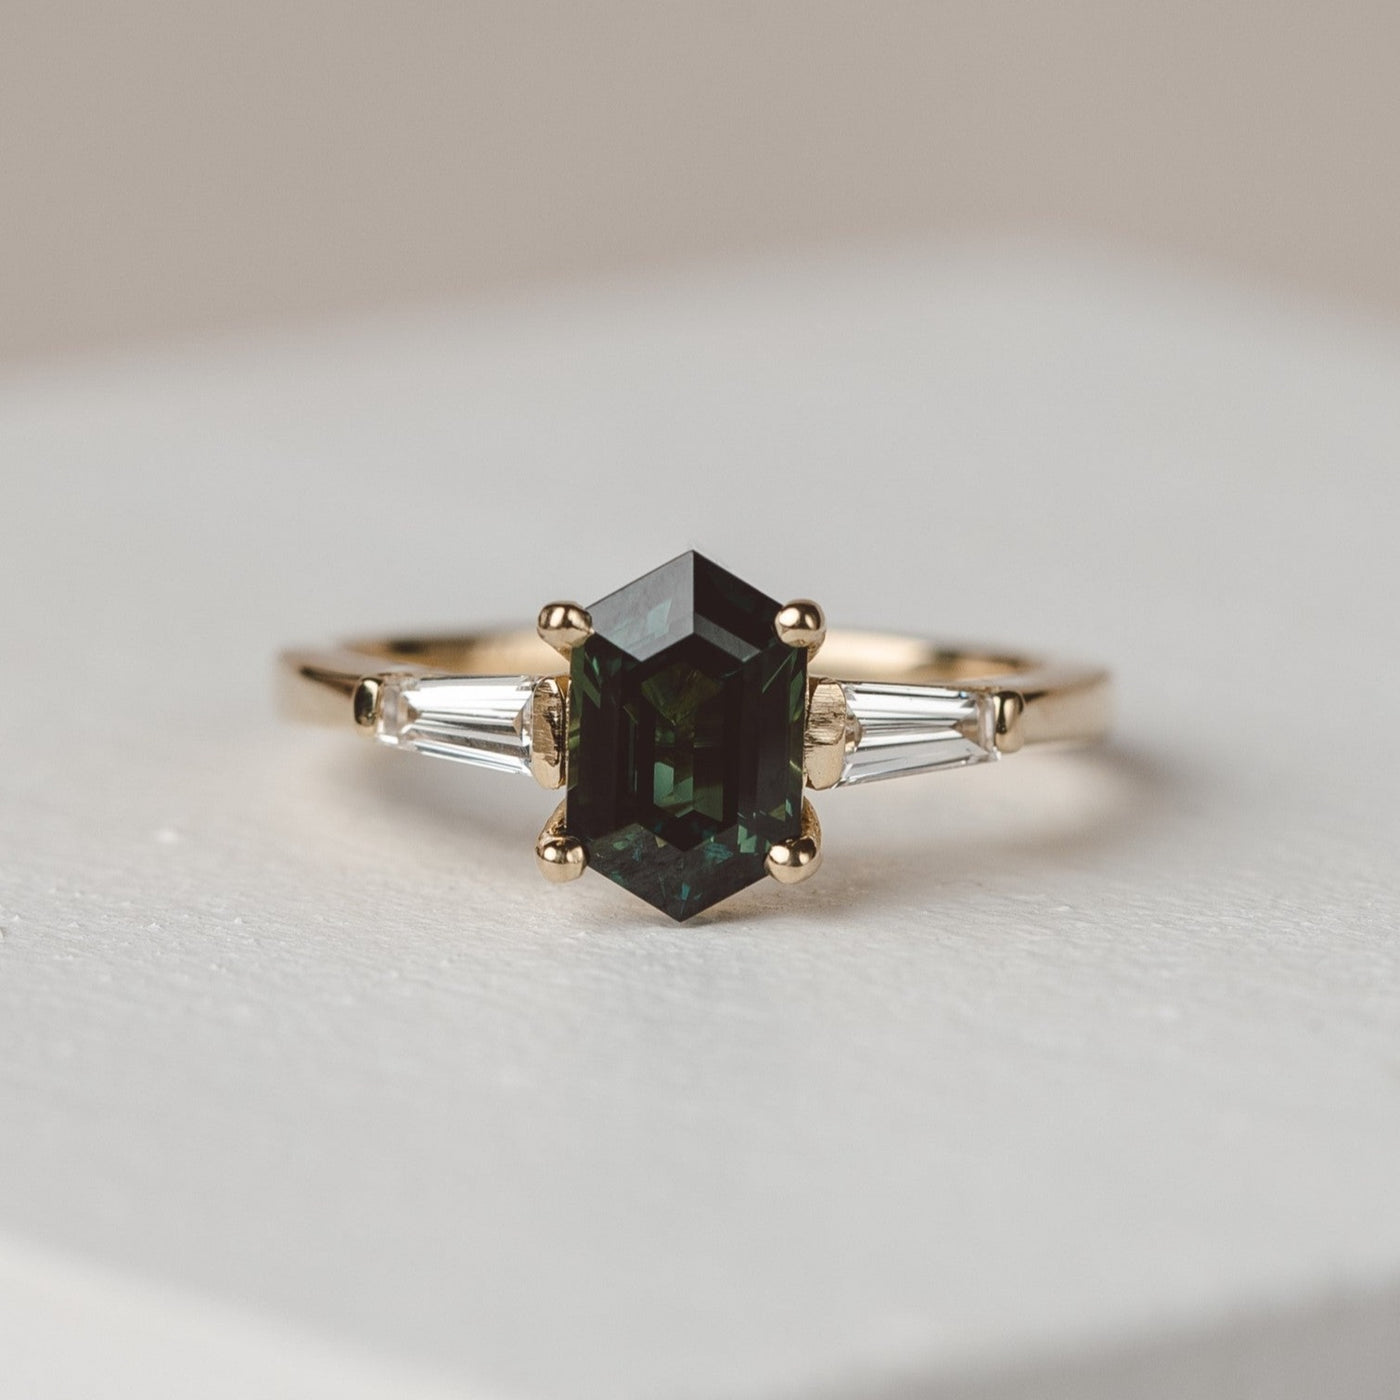 Australian Sapphire Rings